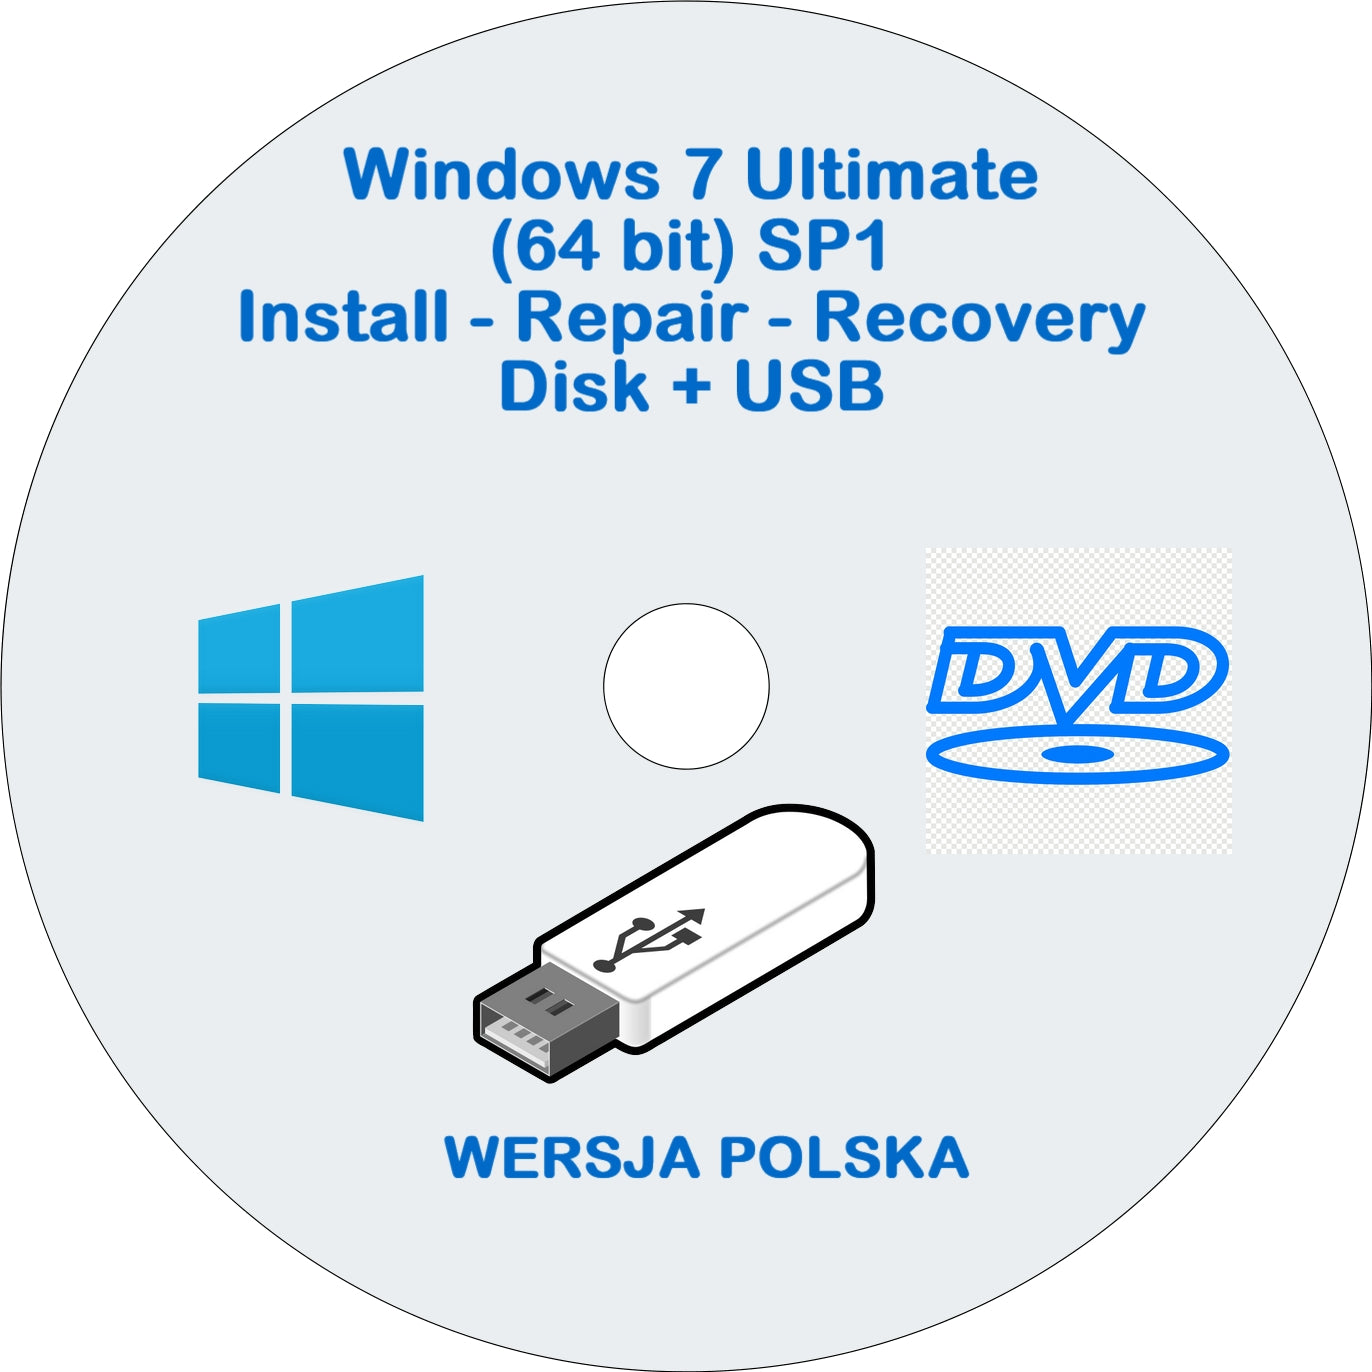 Windows 7 Ultimate Disk + USB 64 Bit